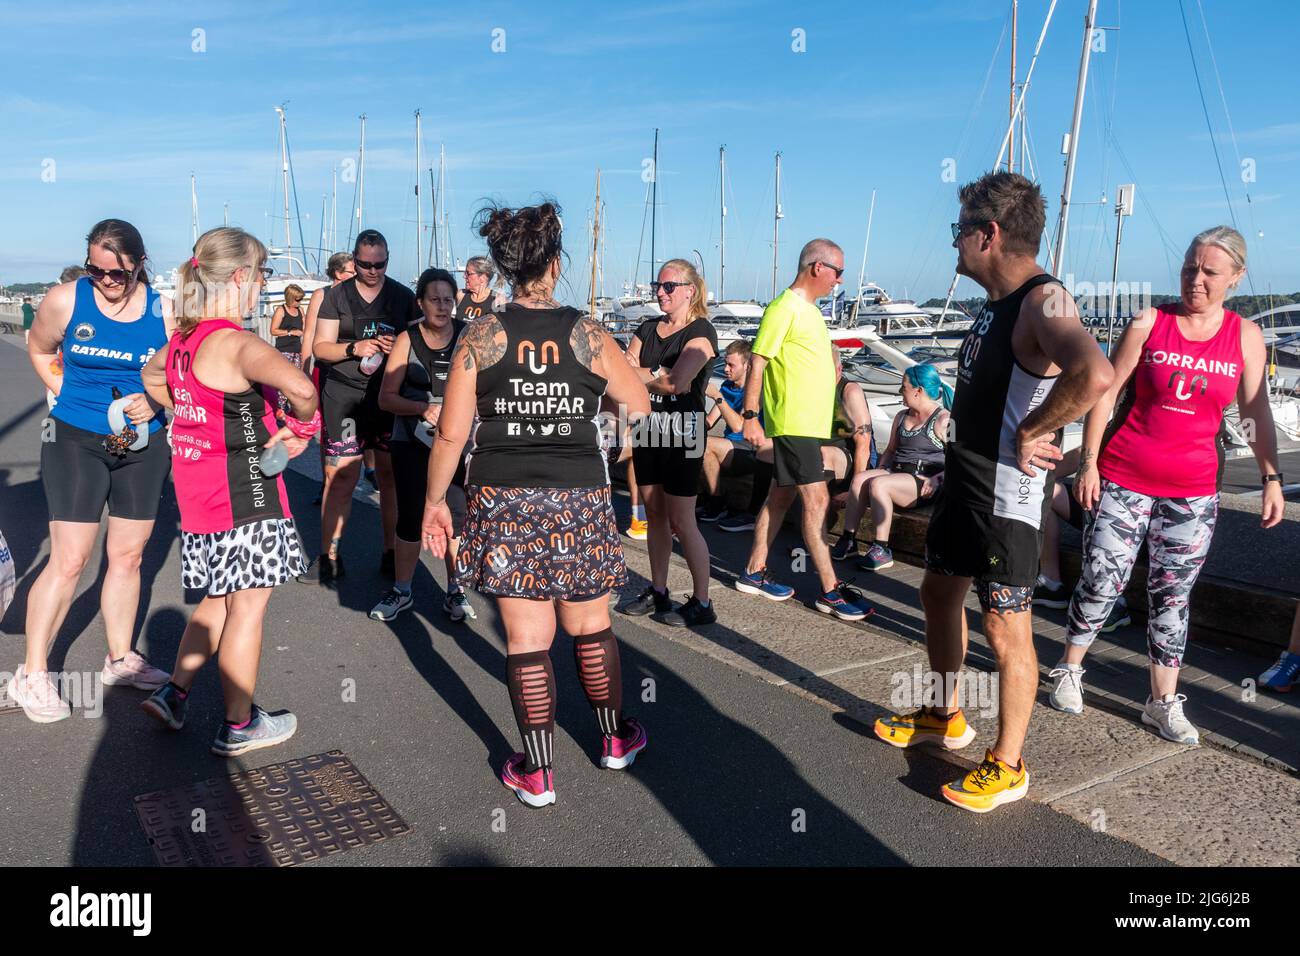 Grupo de corredores del equipo RunFar se reunieron después de una carrera en Poole Seafront, Dorset, Inglaterra, Reino Unido Foto de stock